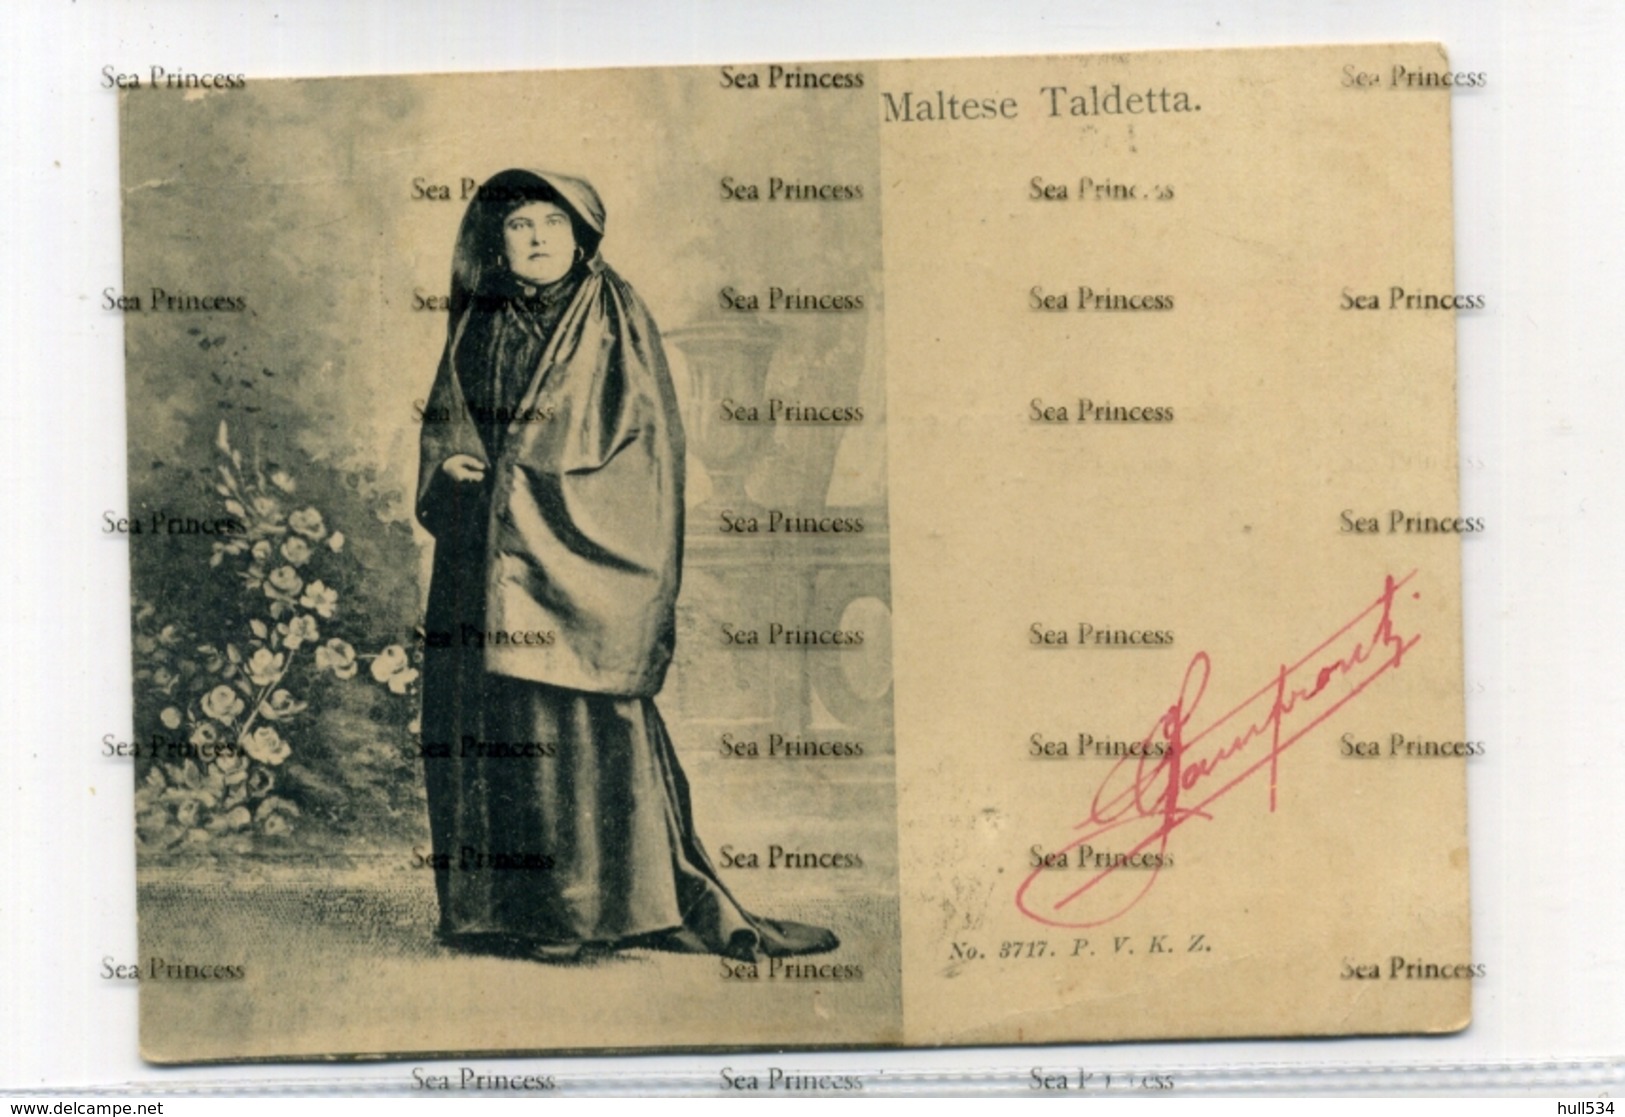 Malta 1900s Court Size Postcard Stamp Removed Maltese Taldetta No.3717 PVKZ - Malta